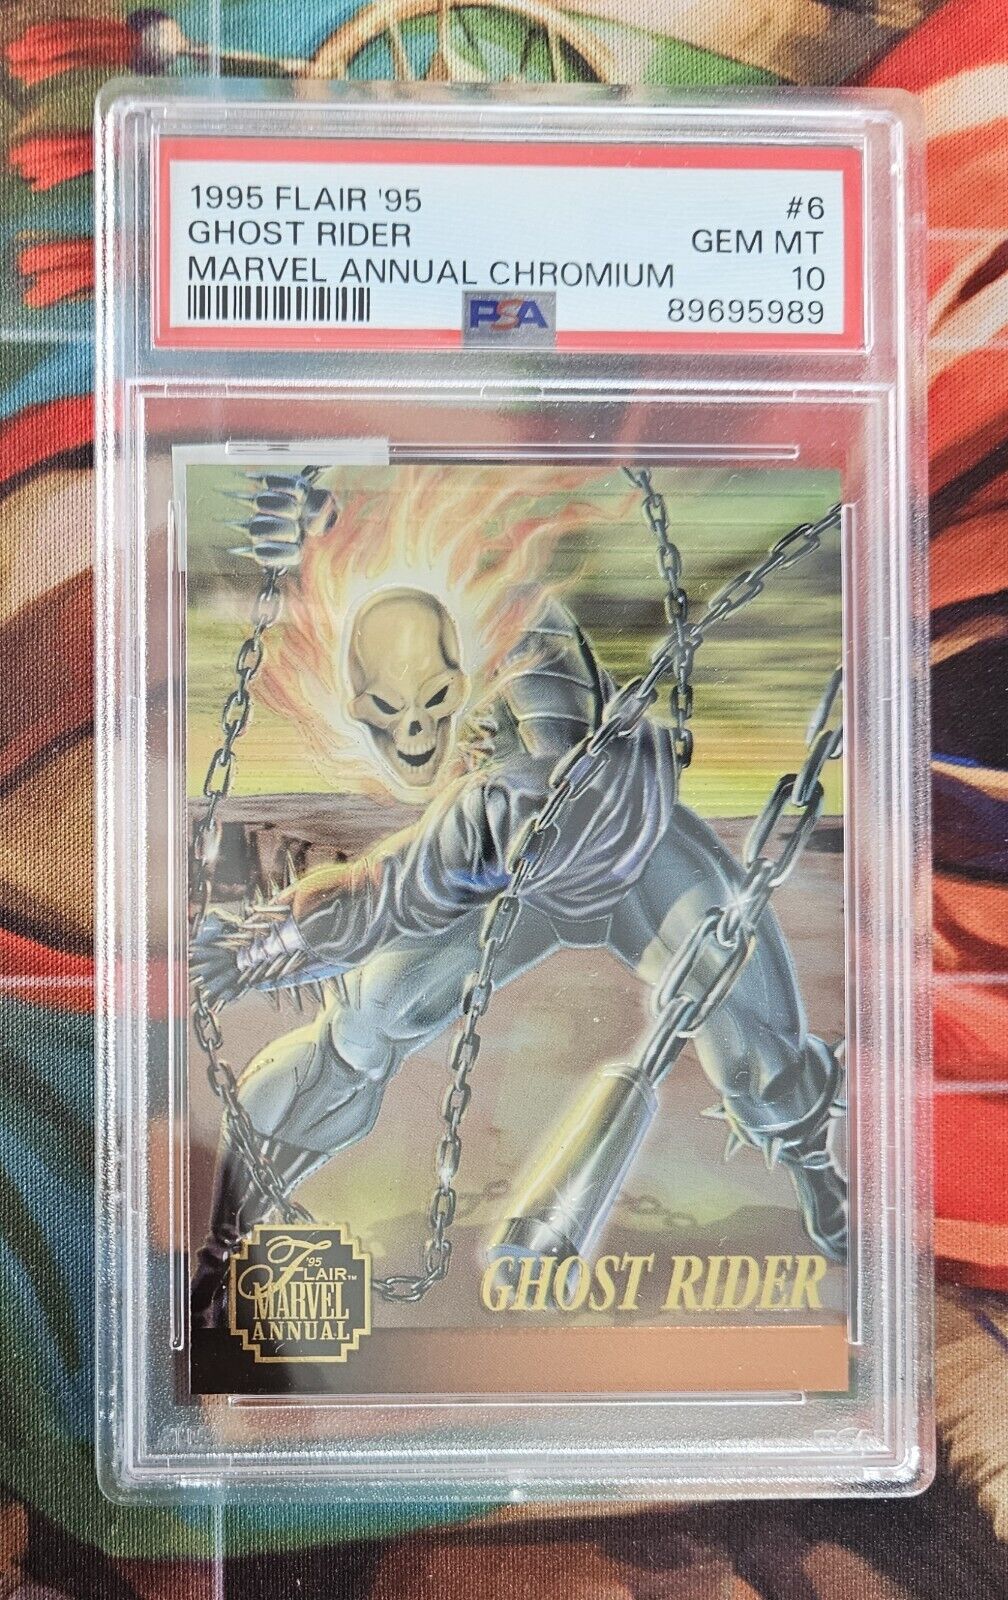 1995 95' Flair Marvel Annual Chromium #6 Ghost Rider PSA 10 Gem Mint 🔥